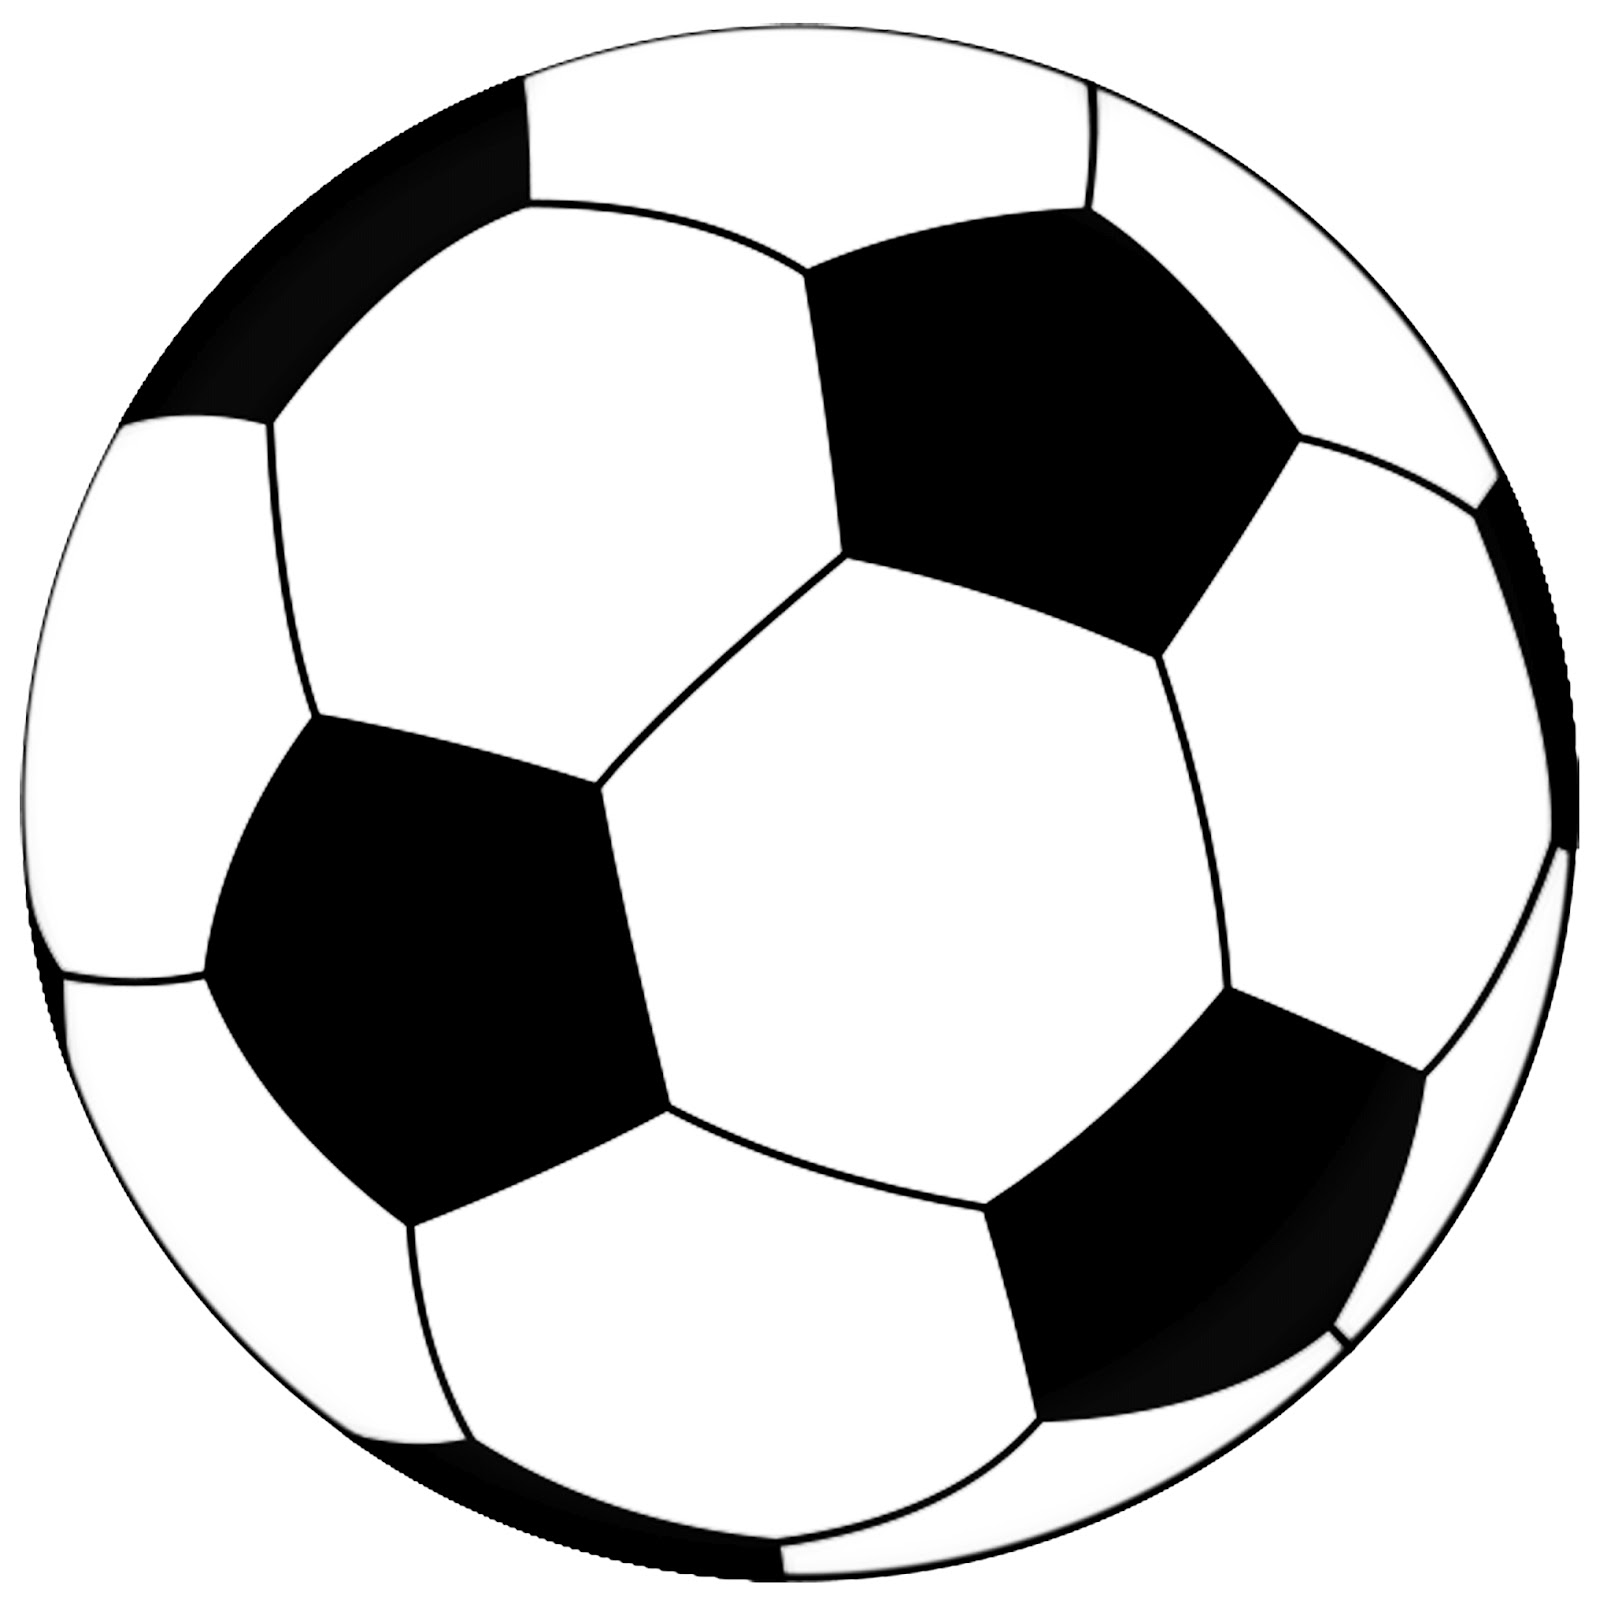 Best Photos of Soccer Ball Template - Soccer Ball Drawing, Soccer ...